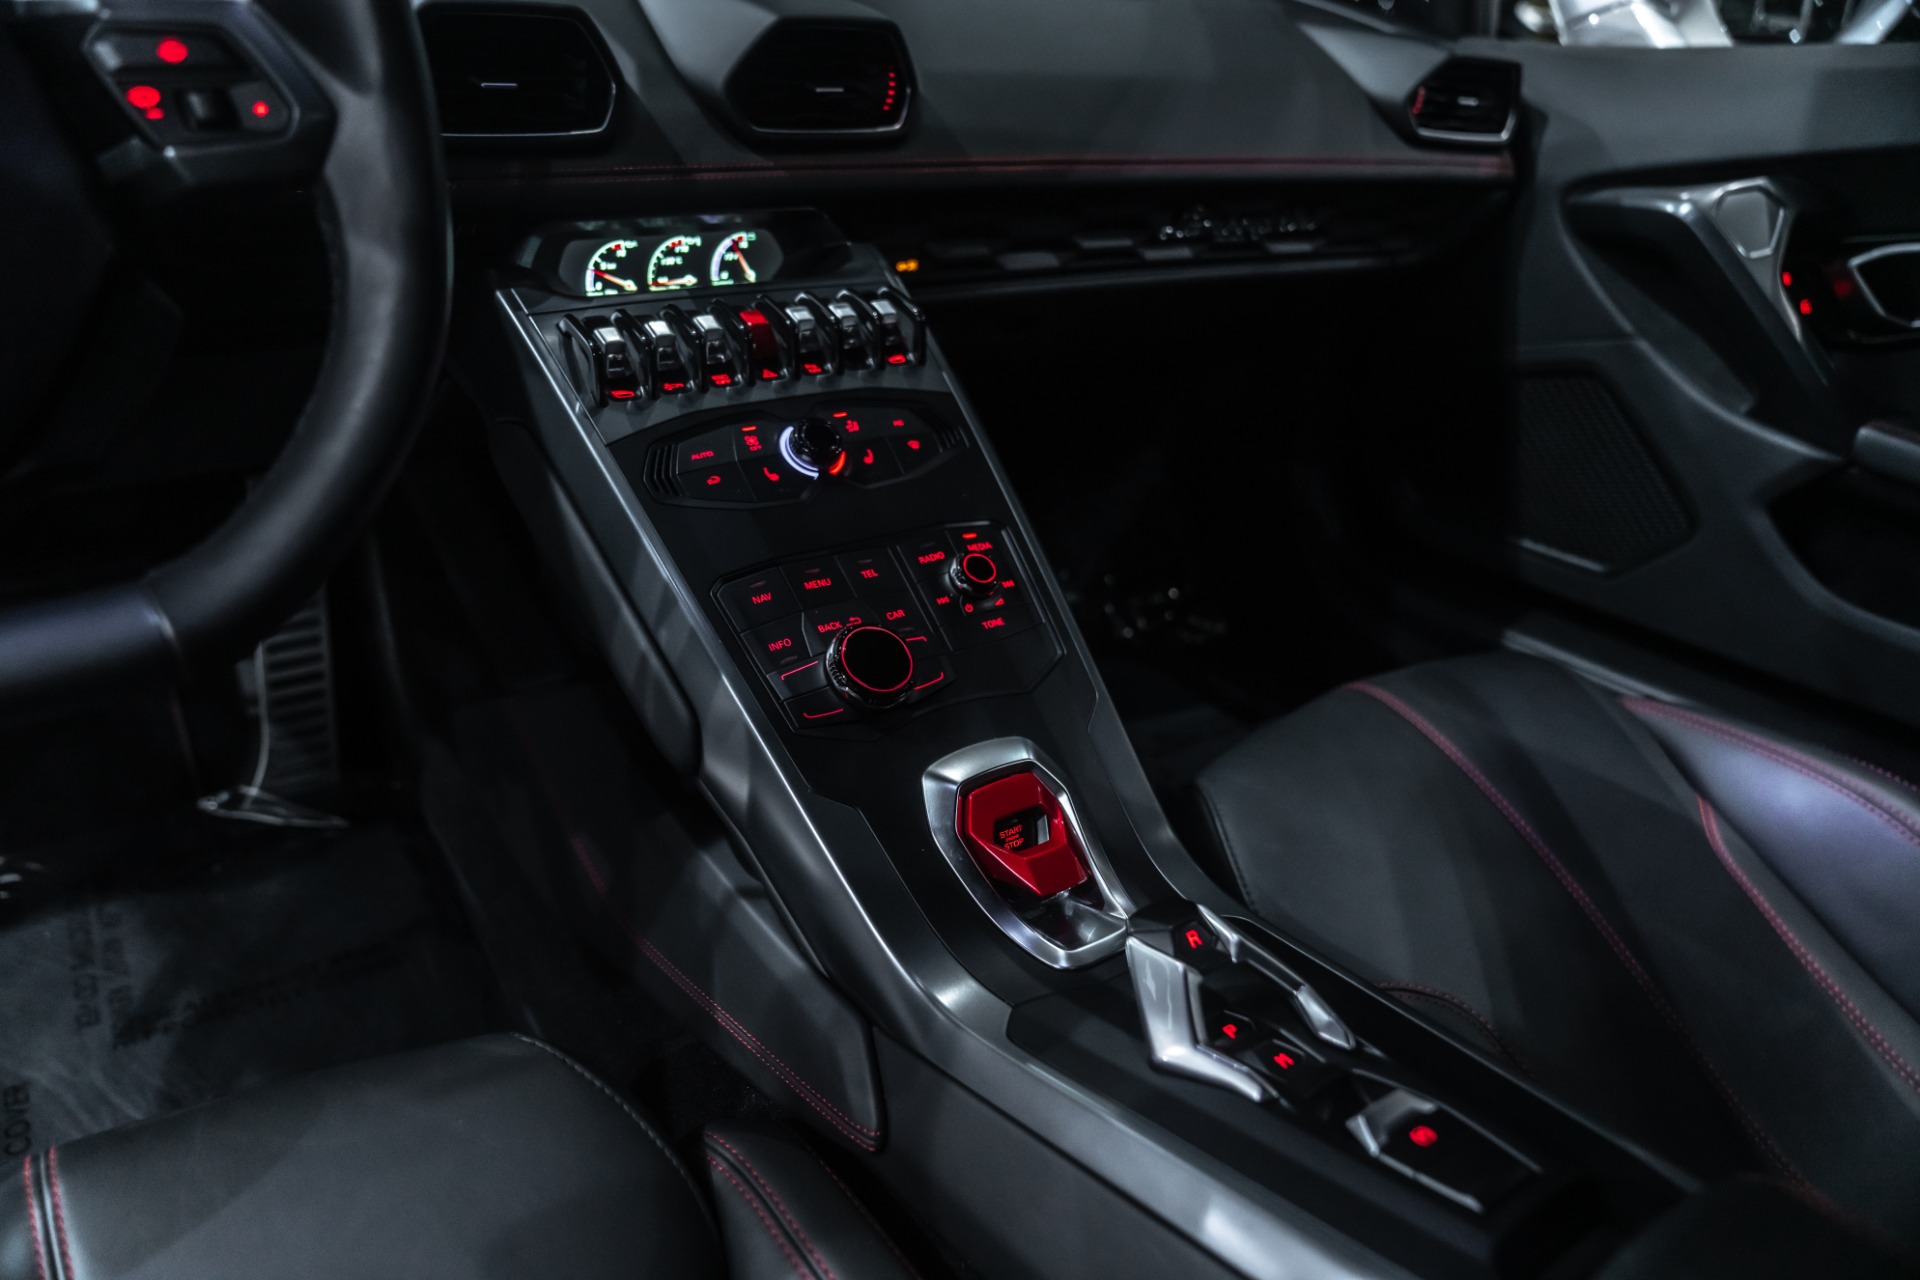 Used-2015-Lamborghini-Huracan-LP610-4-Gorgeous-Color-Carbon-Ceramic-Brakes-20-Forged-Rims-Clean-CarFax